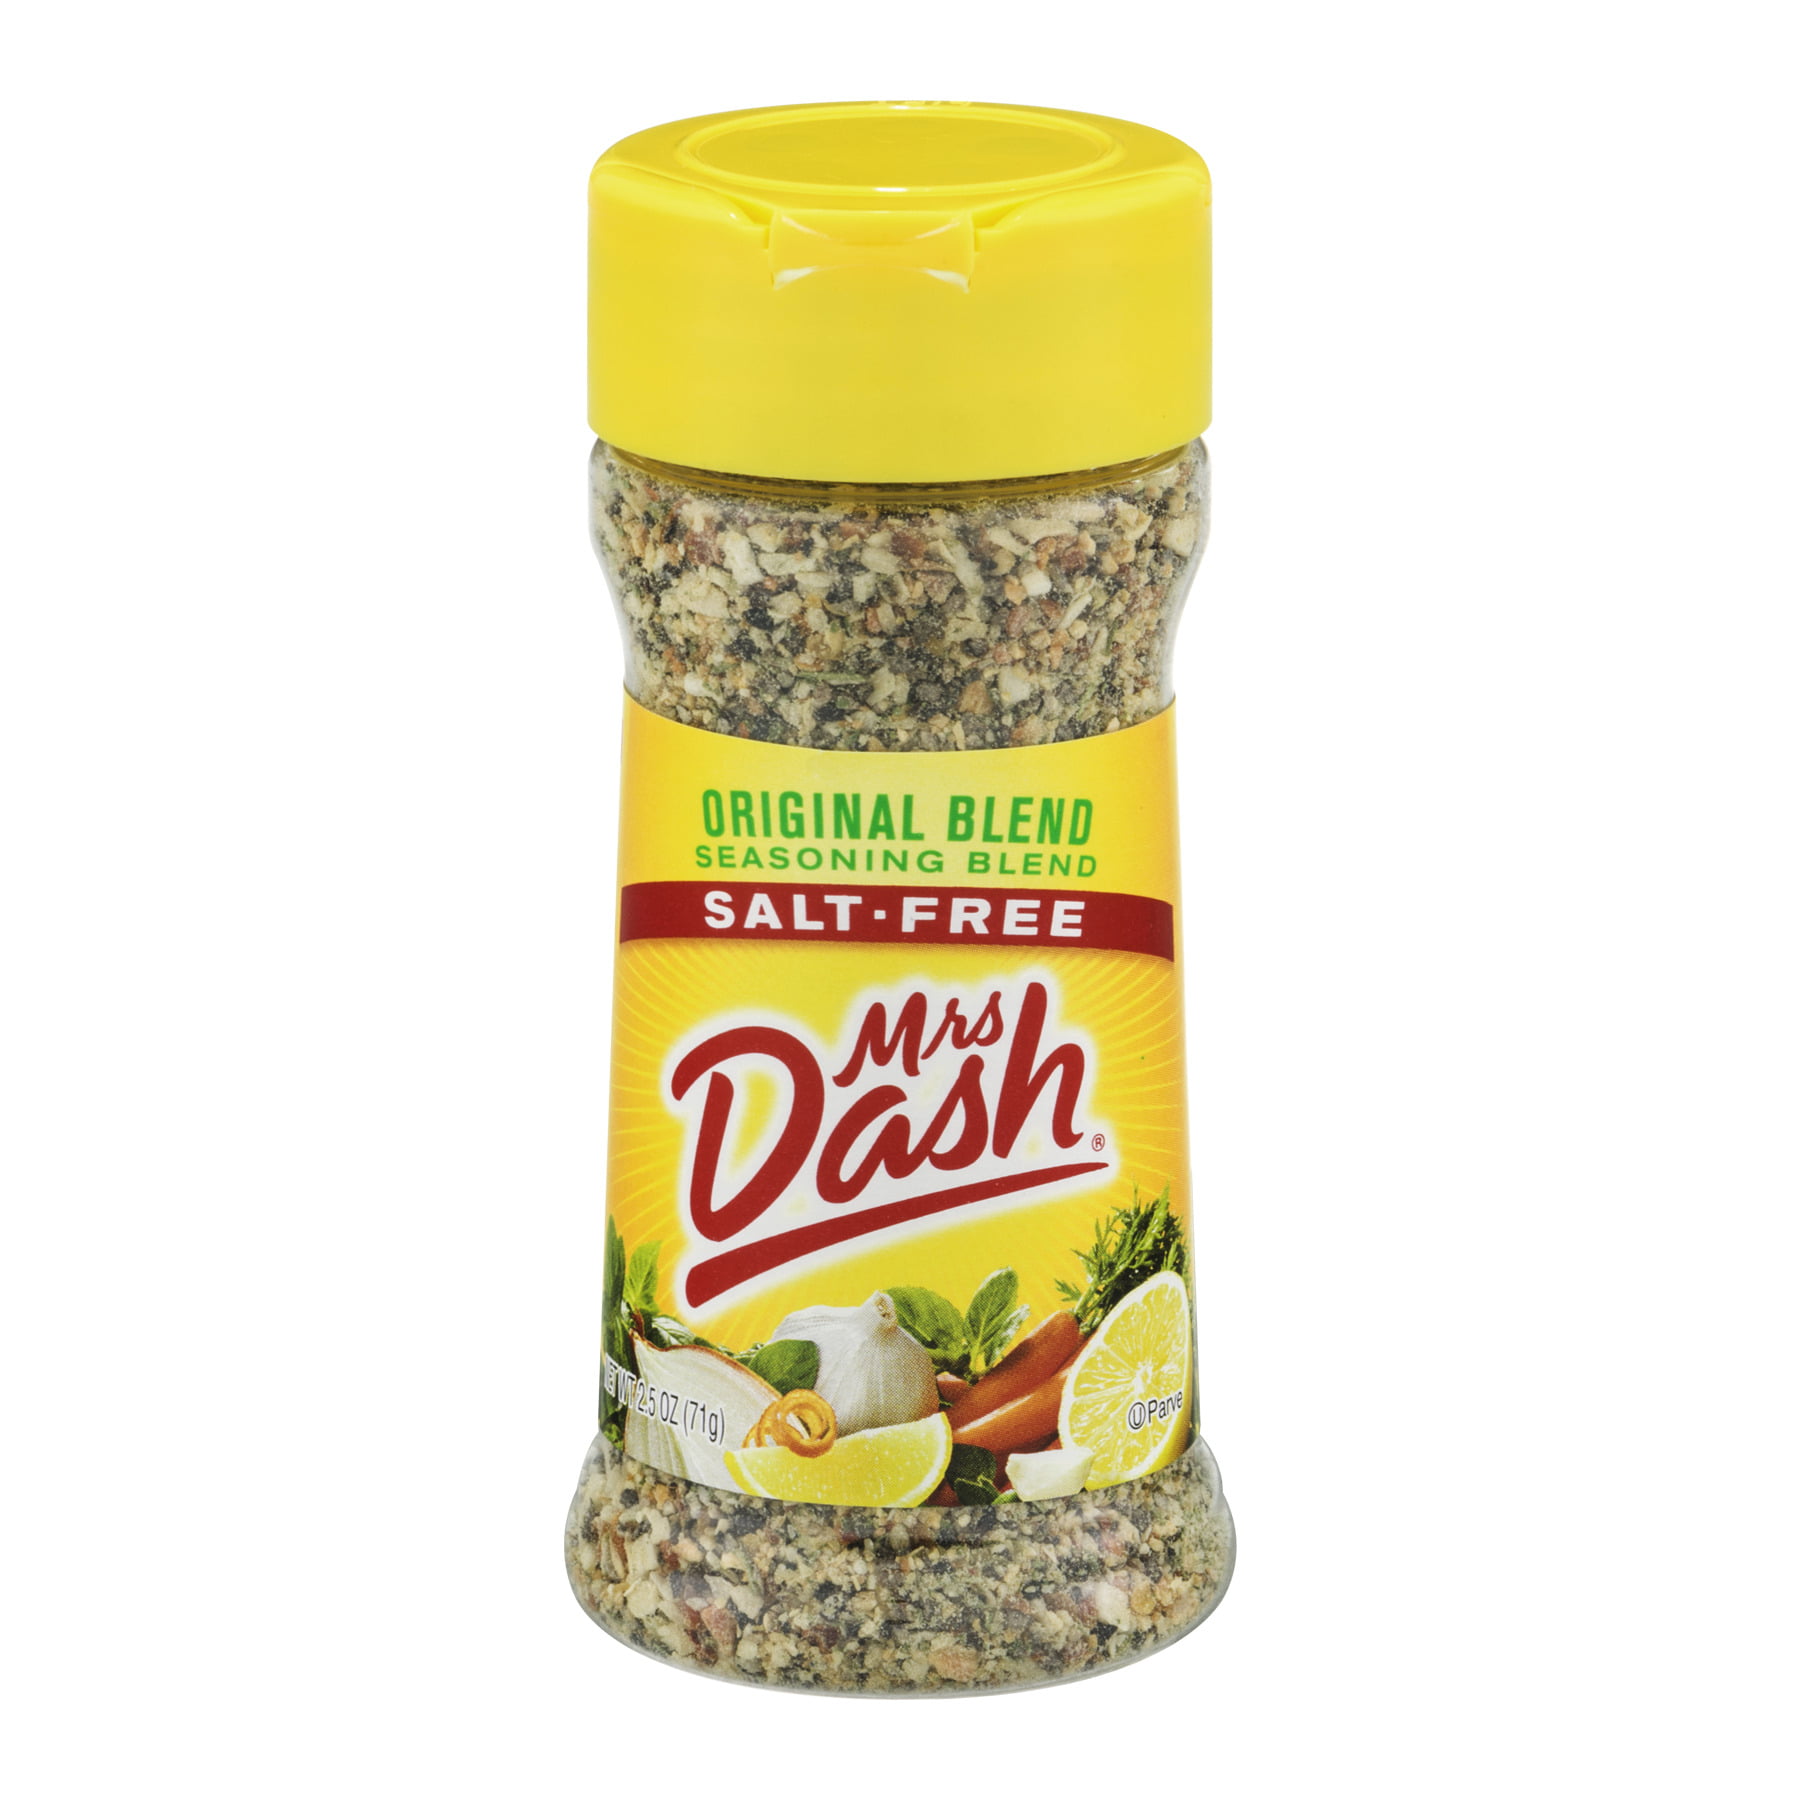 MRS DASH Original Blend Salt-Free Seasoning Blend 2.5 OZ SHAKER (Pack